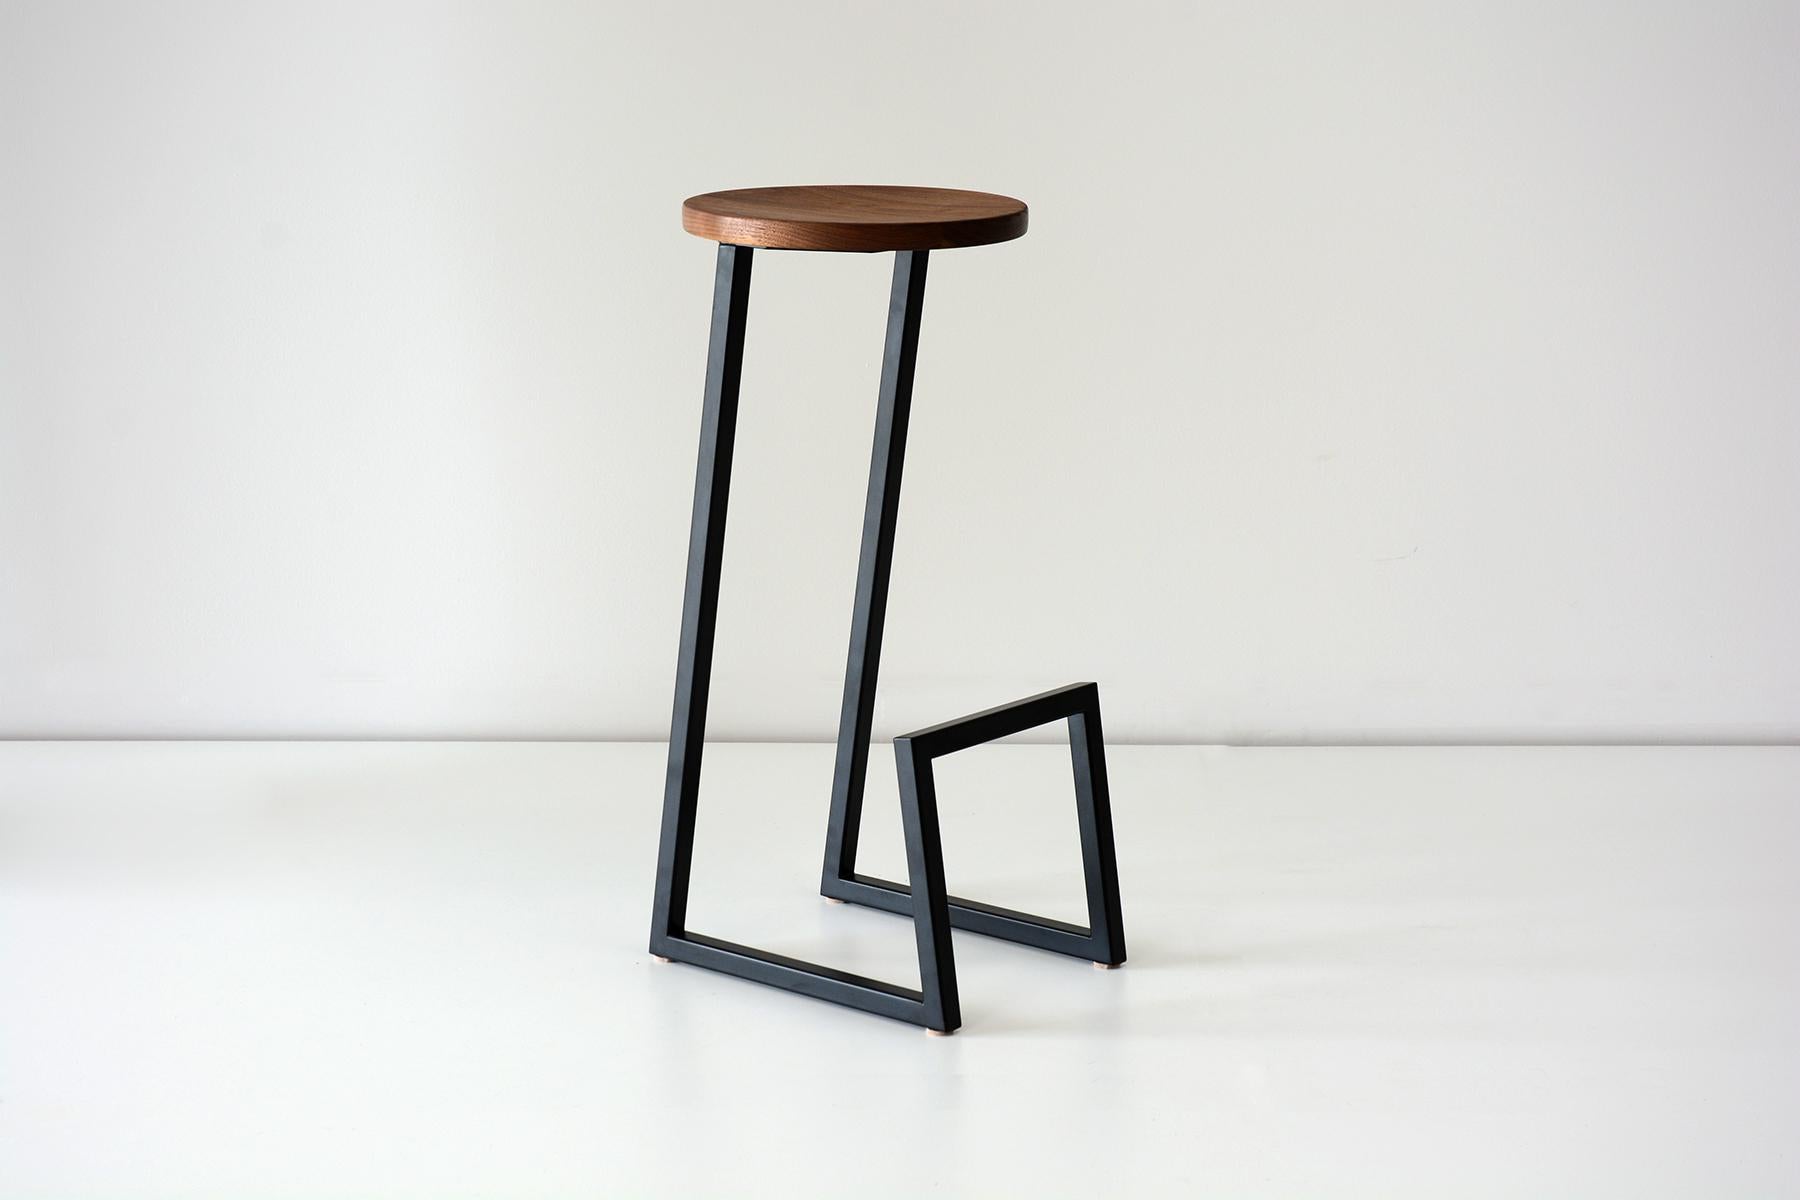 Upholstered walnut corktown stool by Hollis & Morris
Dimensions:
Seat Diameter 13